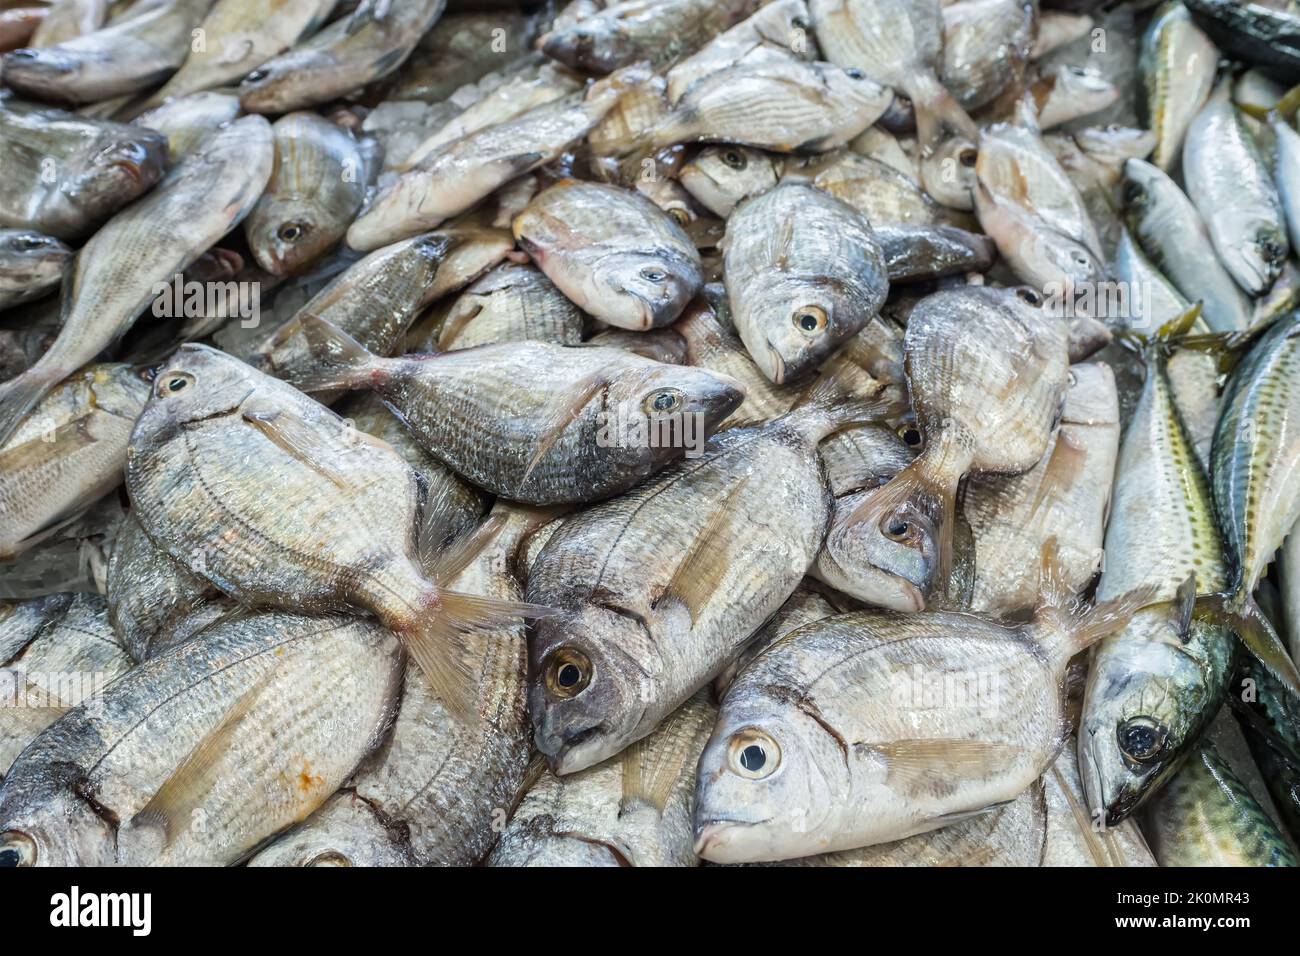 Raw fresh gilt-head bream fish on a market counter. Stock Photo